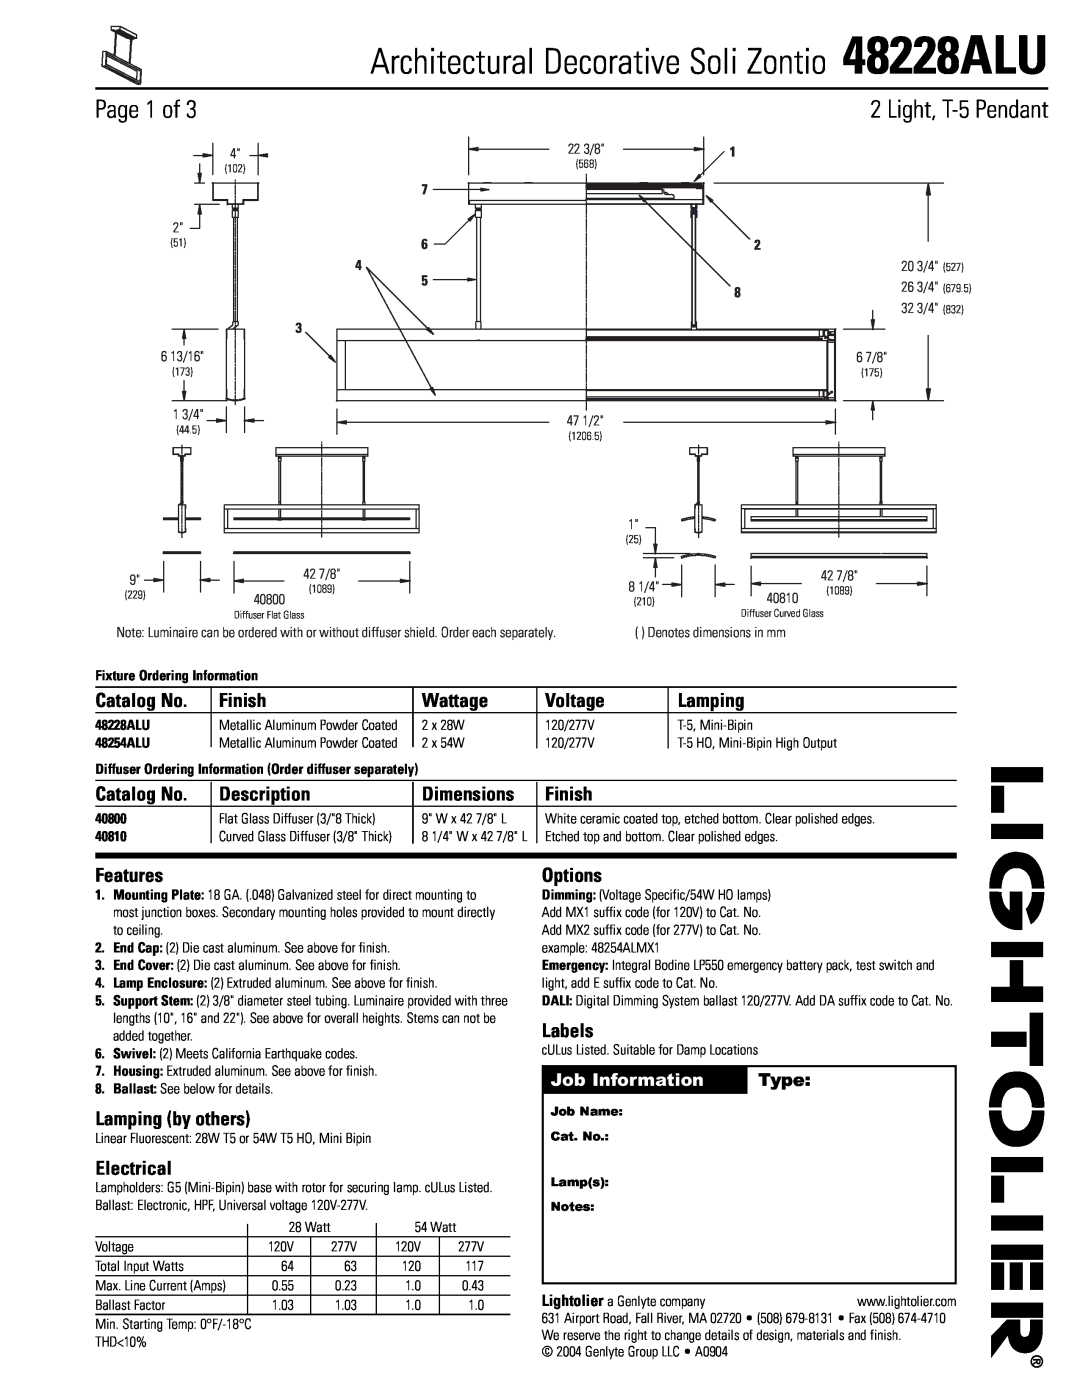 Lightolier dimensions Architectural Decorative Soli Zontio 48228ALU, Page 1 of 